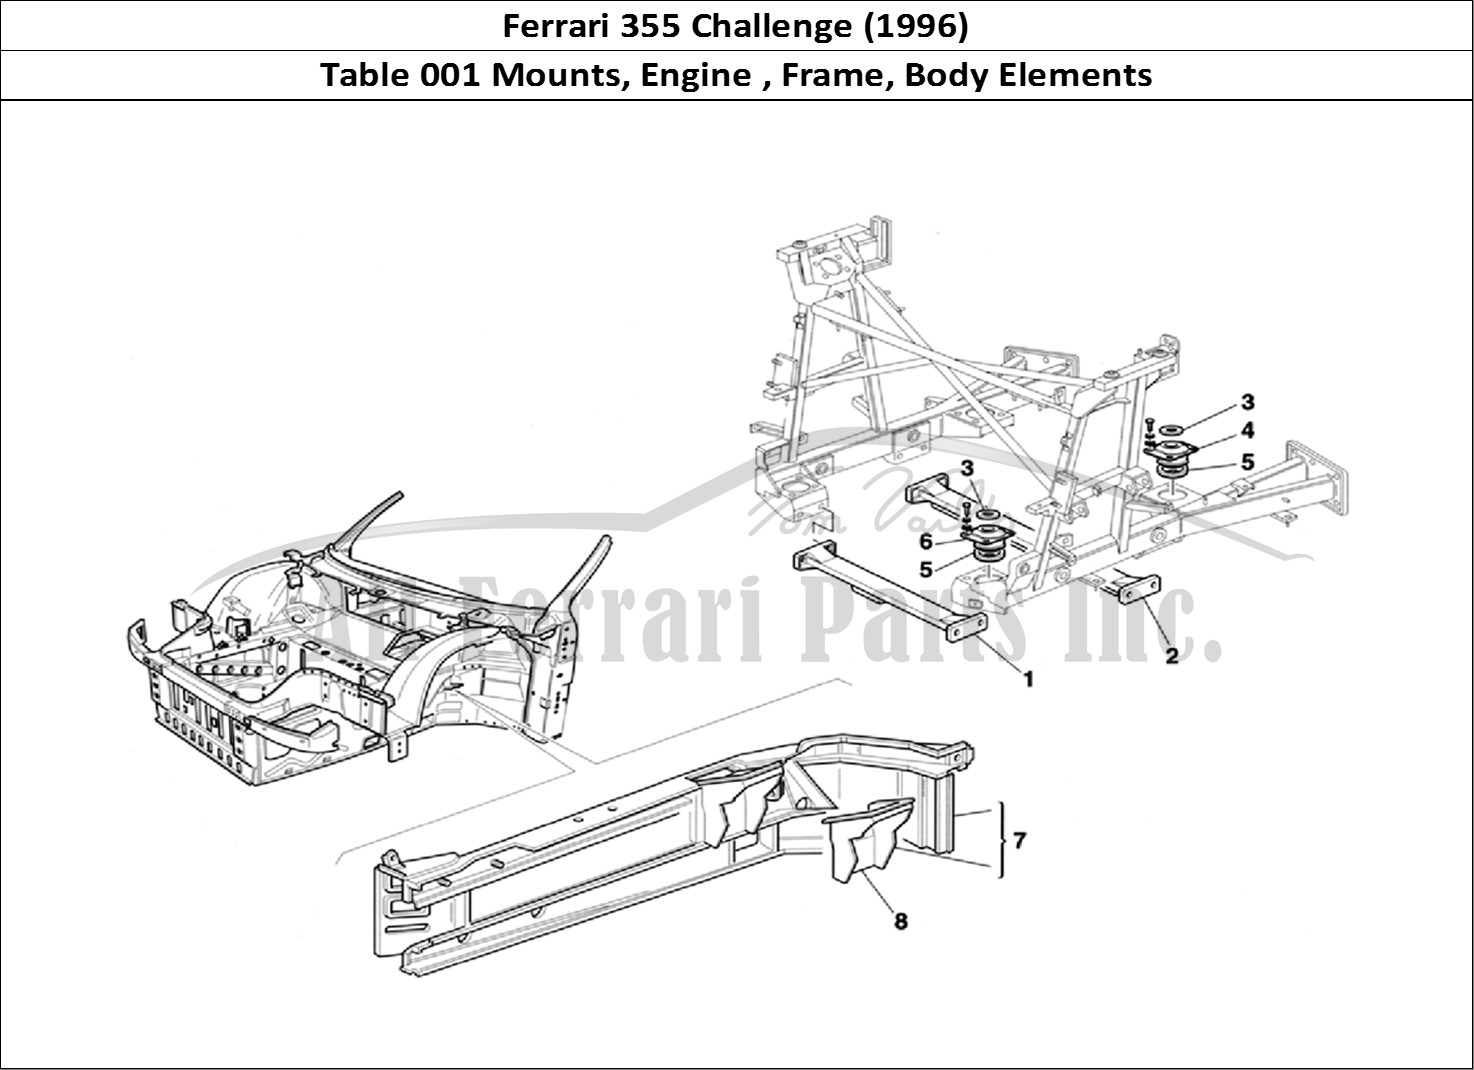 Ferrari Parts Ferrari 355 Challenge (1996) Page 001 Engine Supports - Chassis